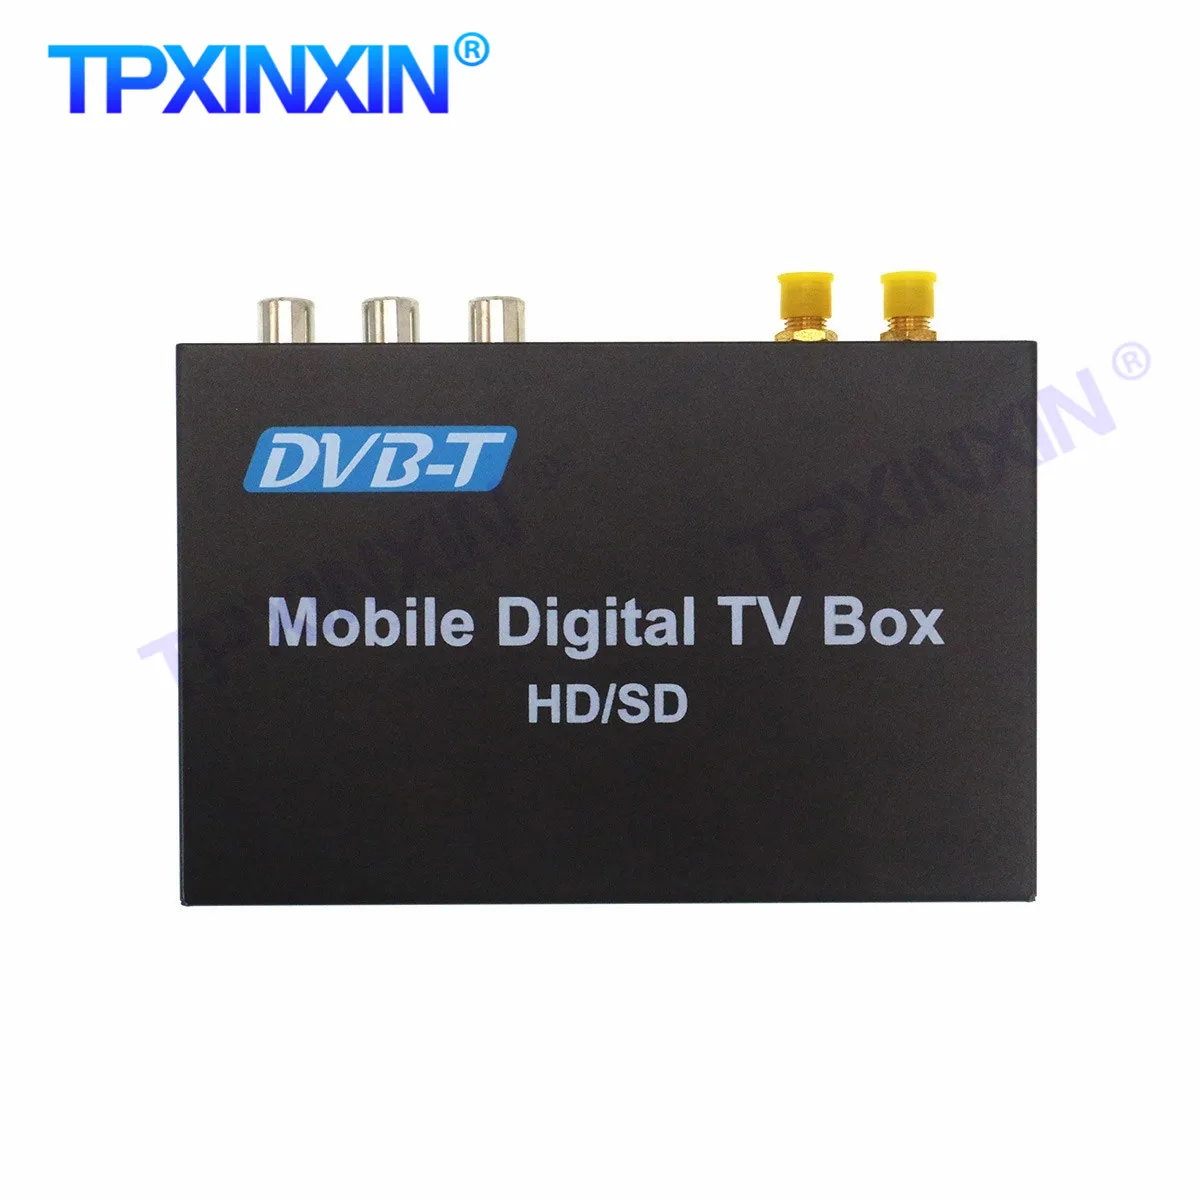 

Original GTMedia V7 S2x Satellite TV Receiver DVB-T/ DVB-T2 Ful HD 1080P + USB WIFI Upgrade BY Freesat Decoder No App Included